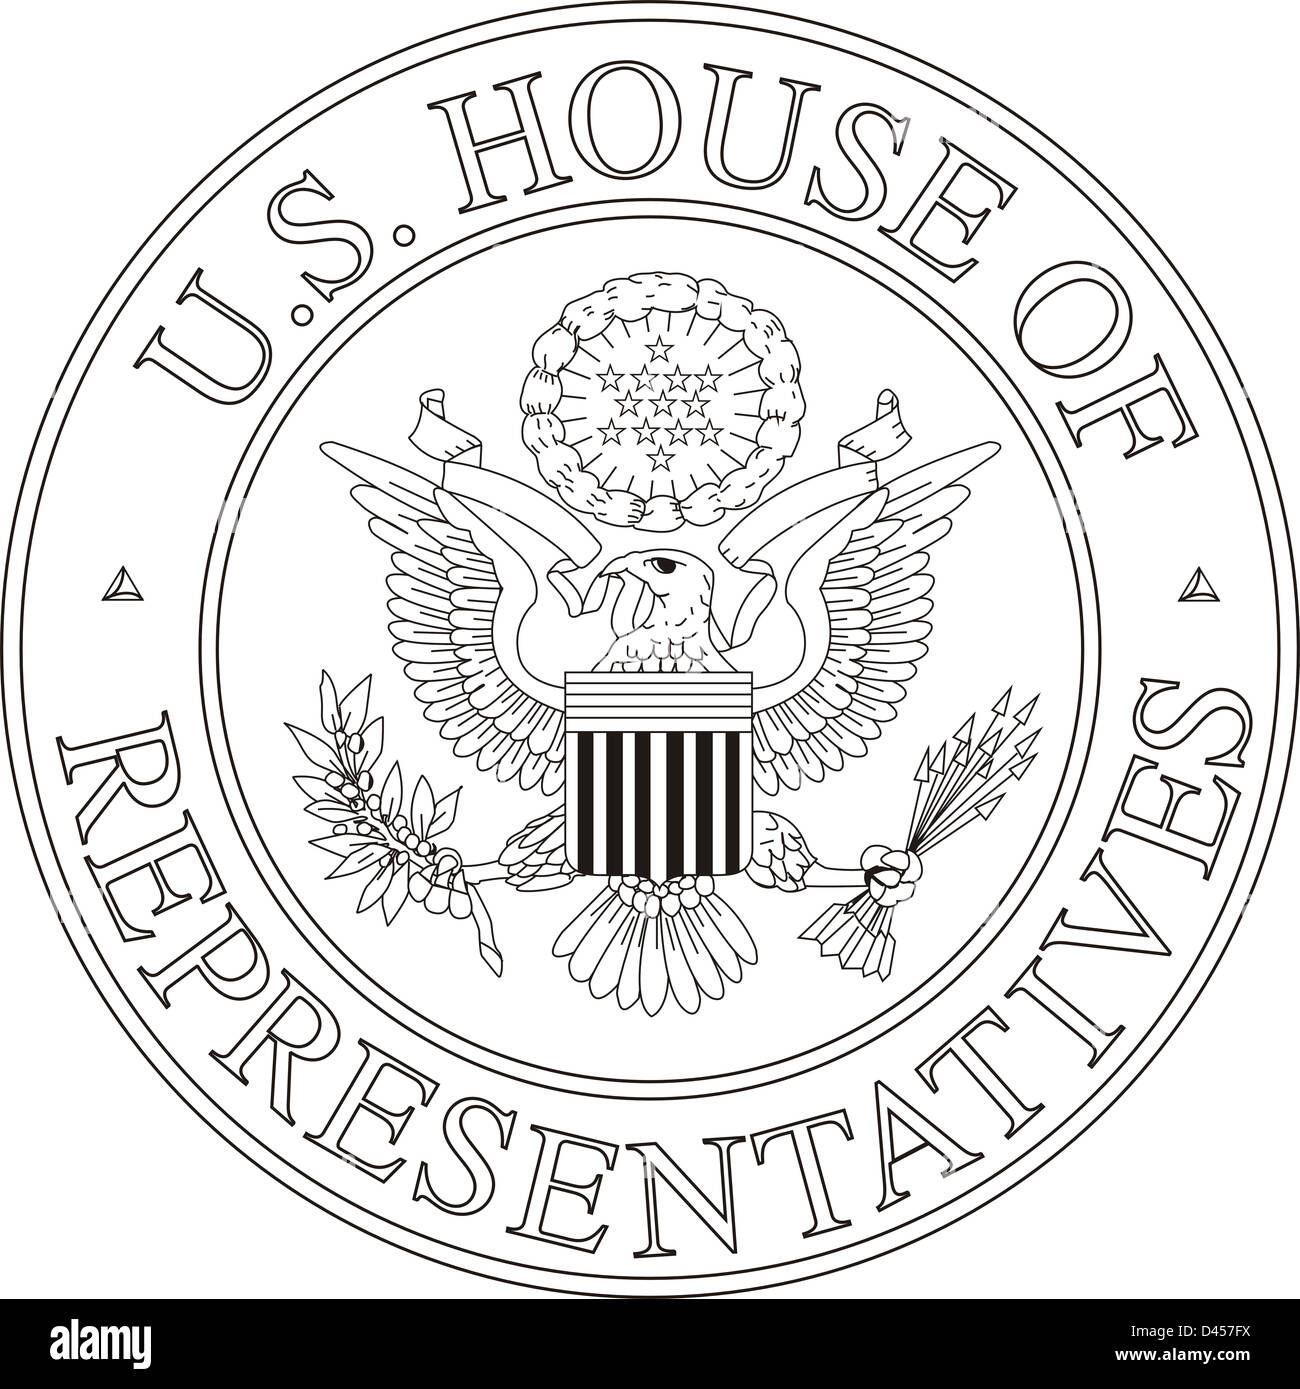 House Of Representatives Seal